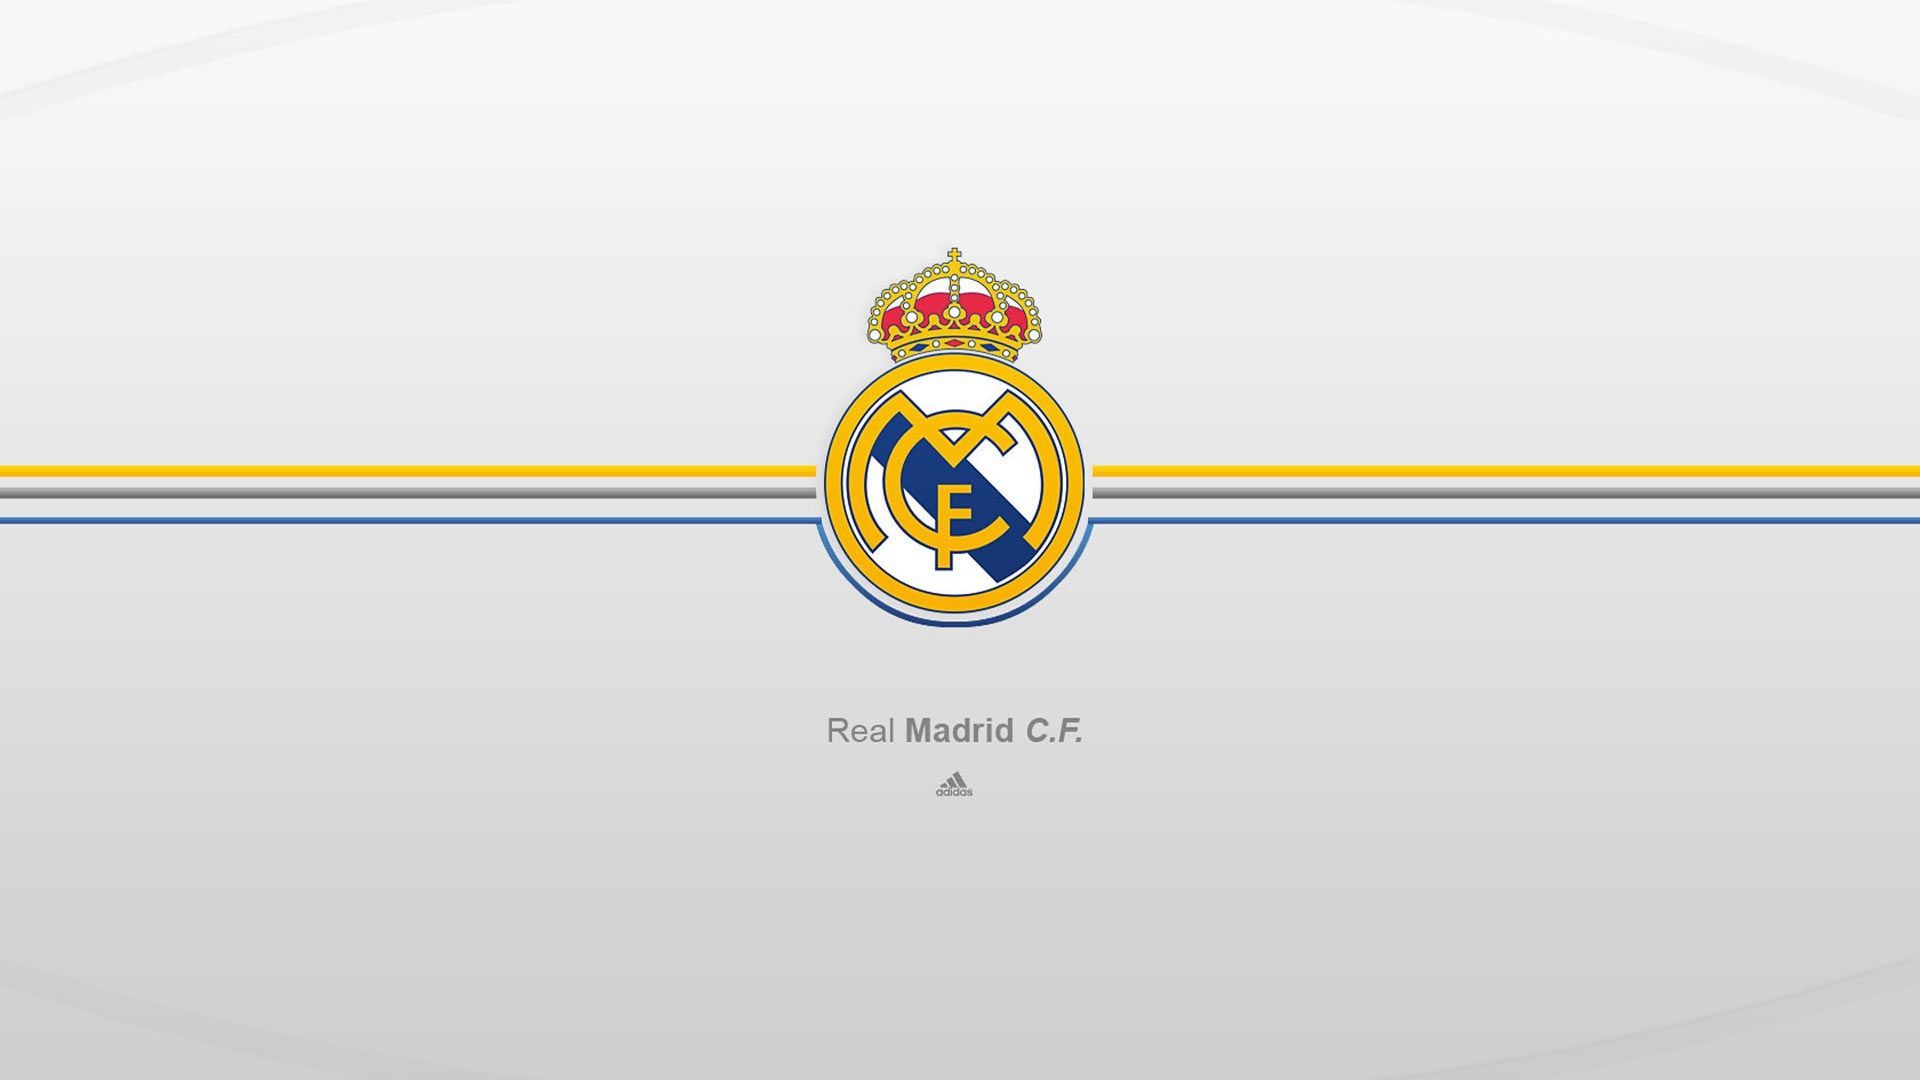 Real Madrid Wallpapers | Download Free Desktop Wallpaper Images ...